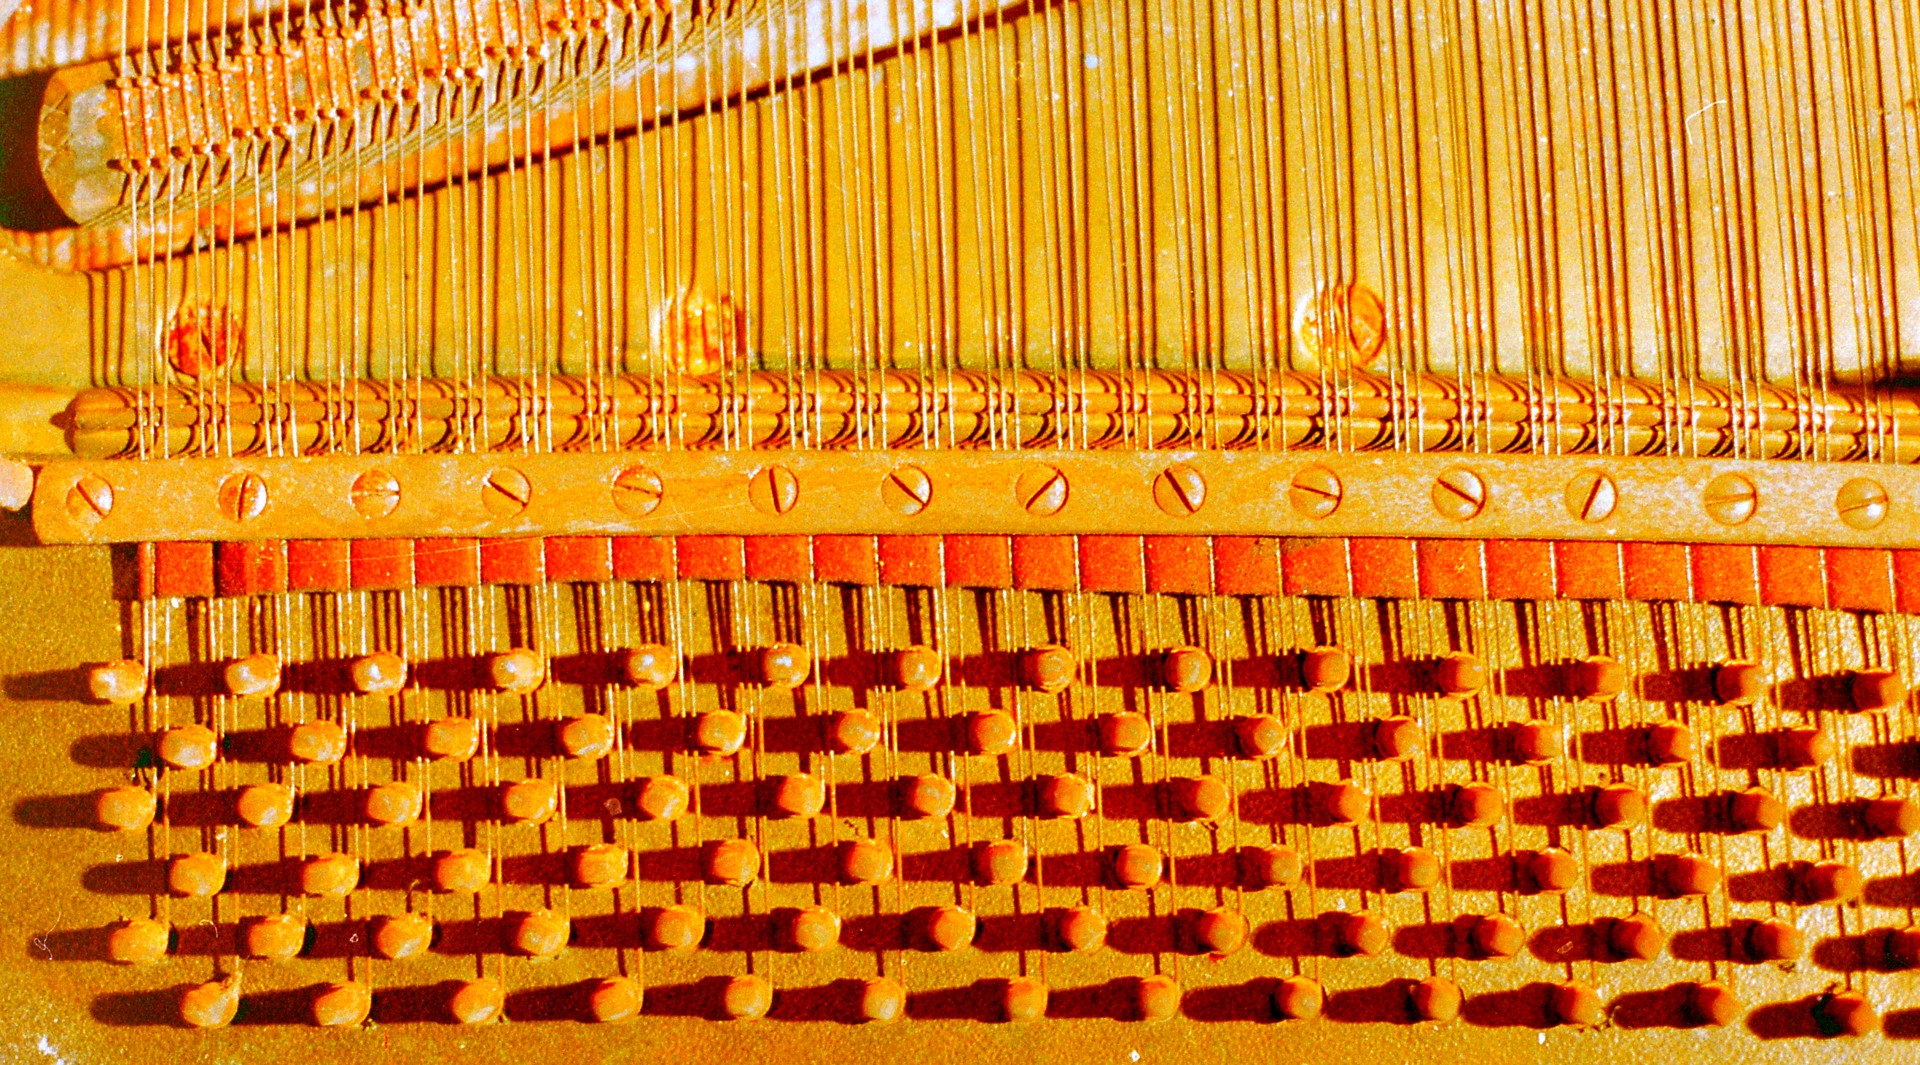 piano strings piano strings free photo